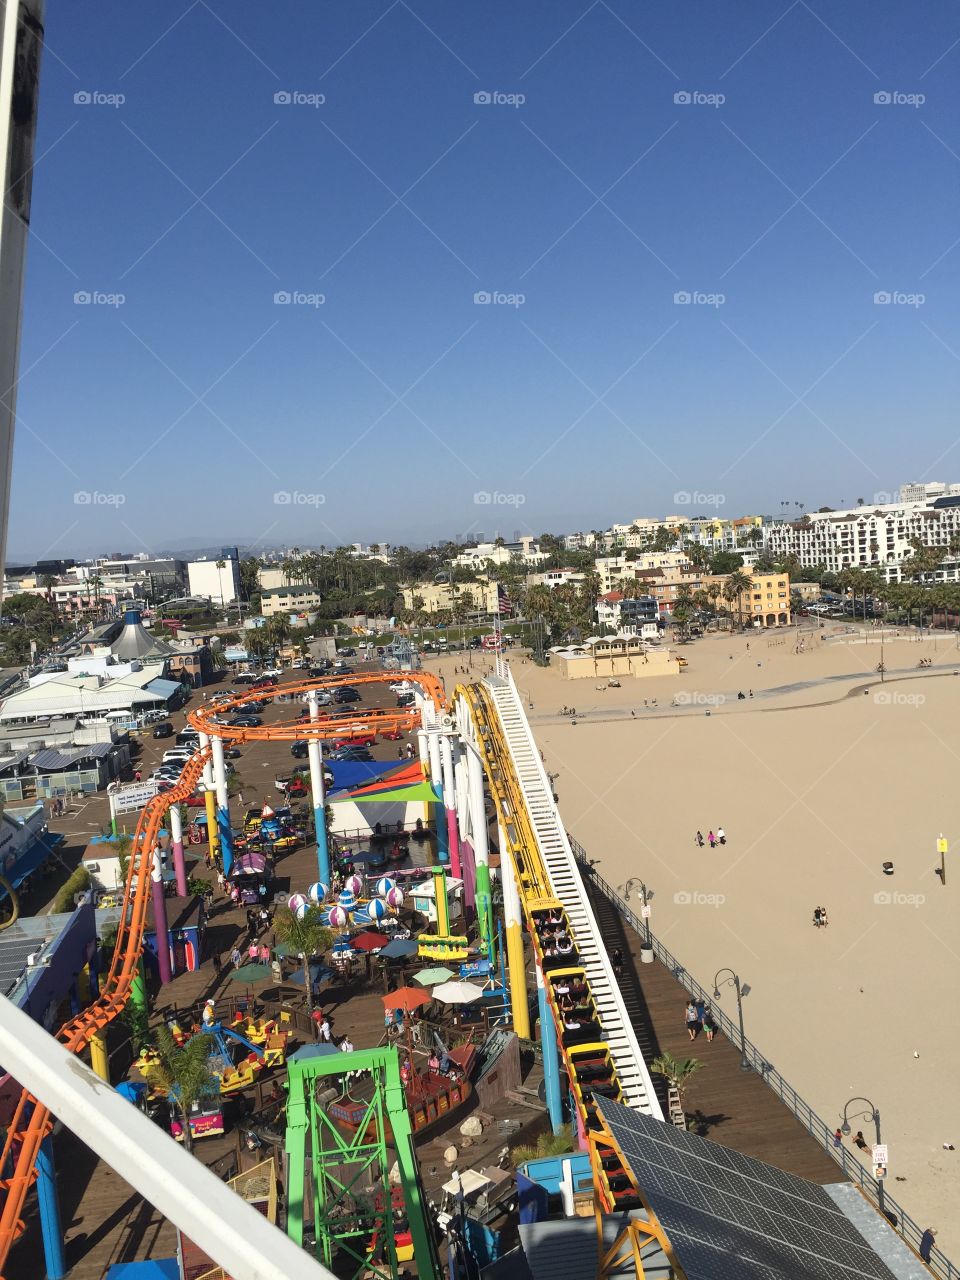 Santa Monica, CA from the Ferris Wheel 